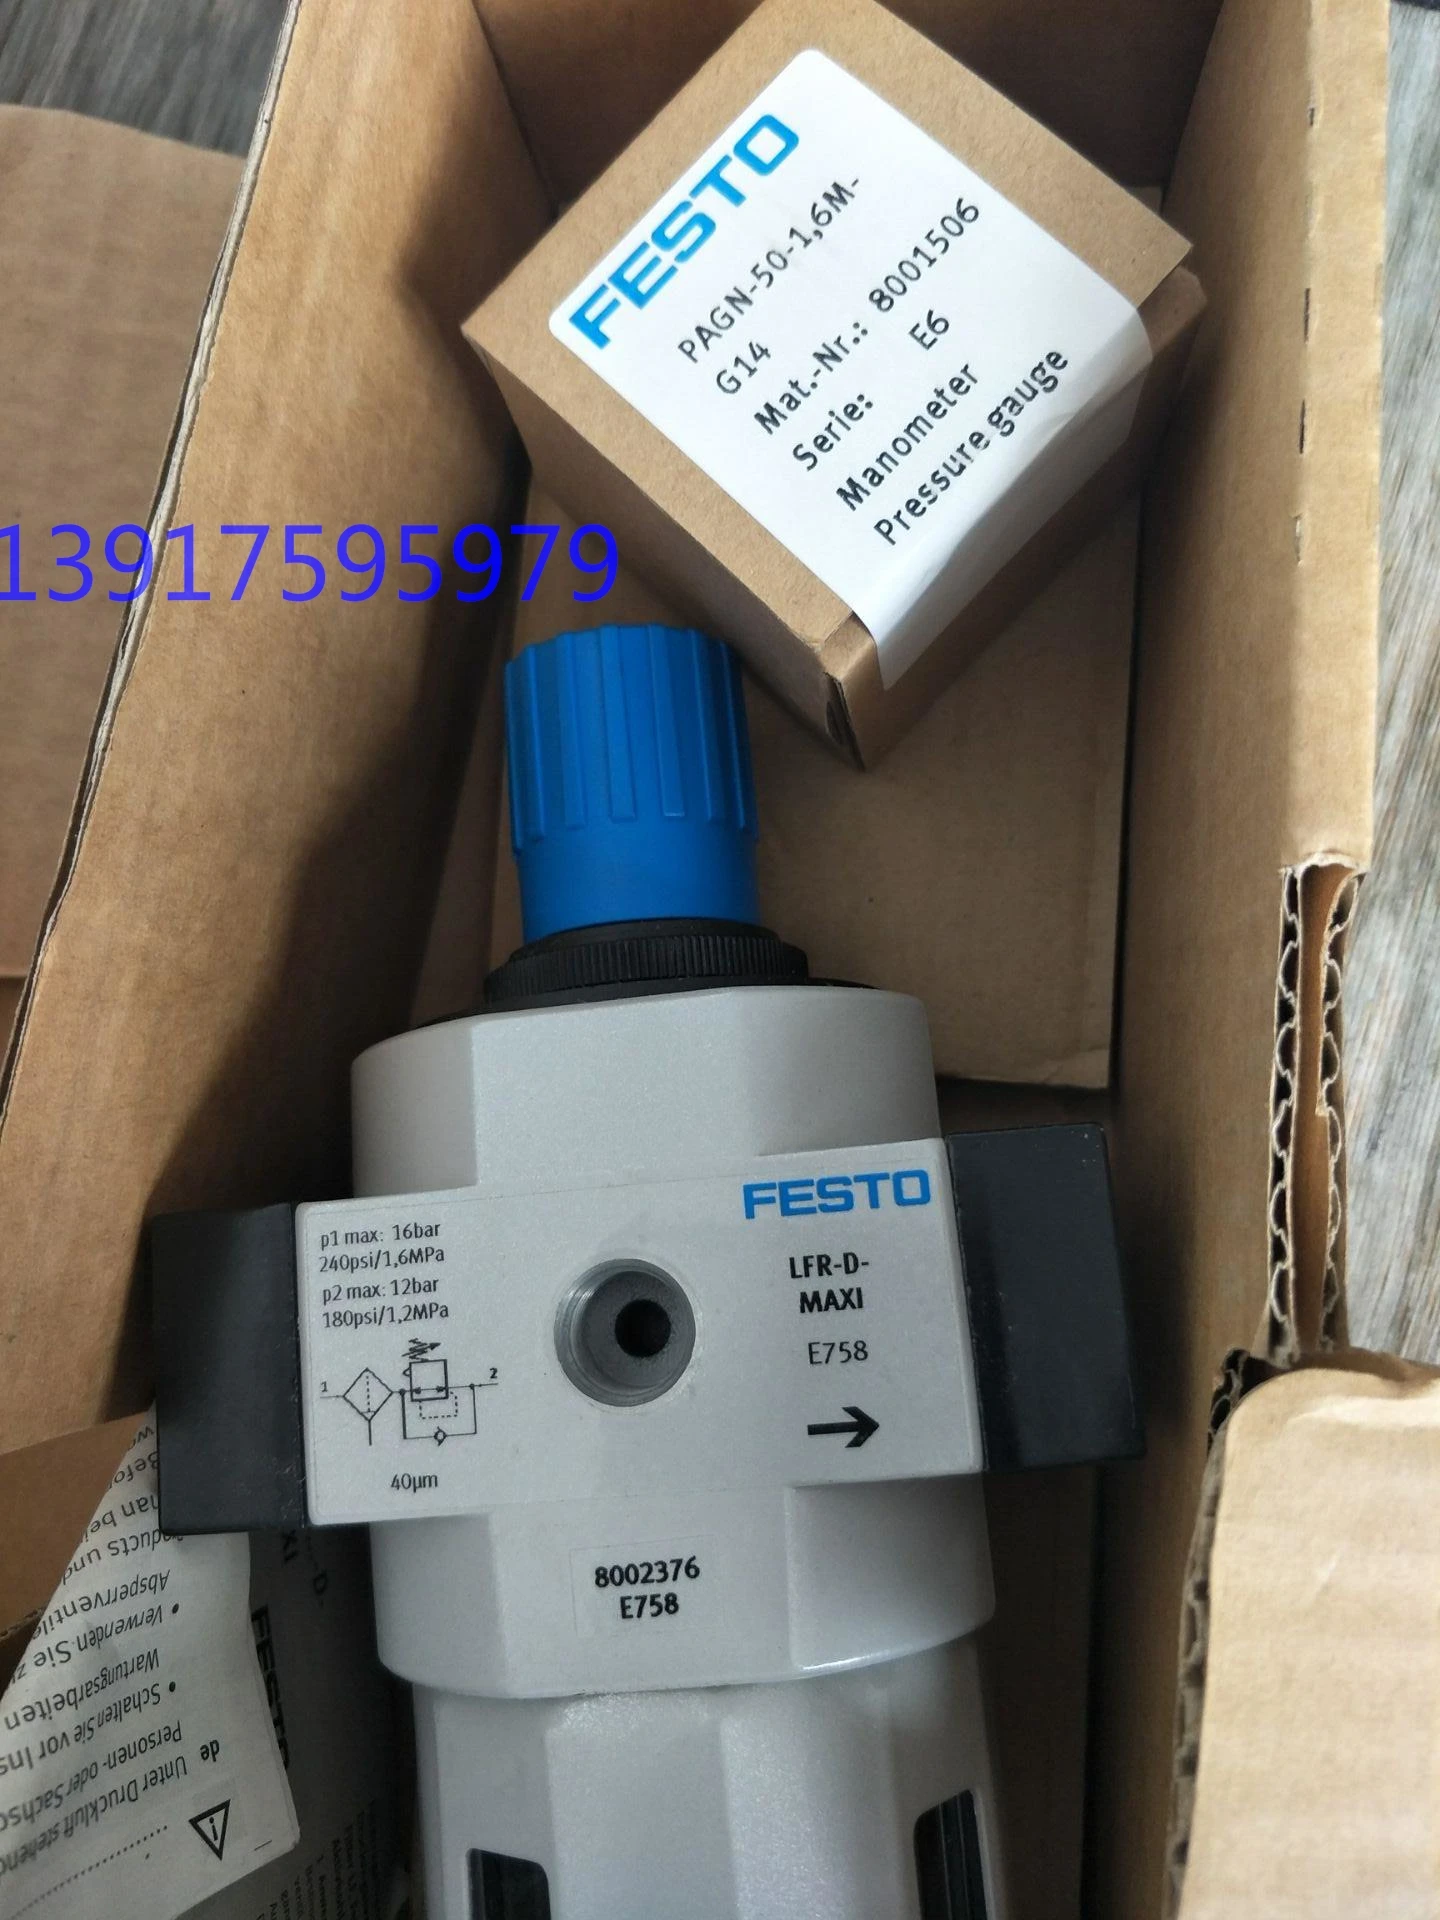 

FESTO Filter Pressure Reducing Valve LFR-1/2-D-MAXI-MPA 8002376 In Stock